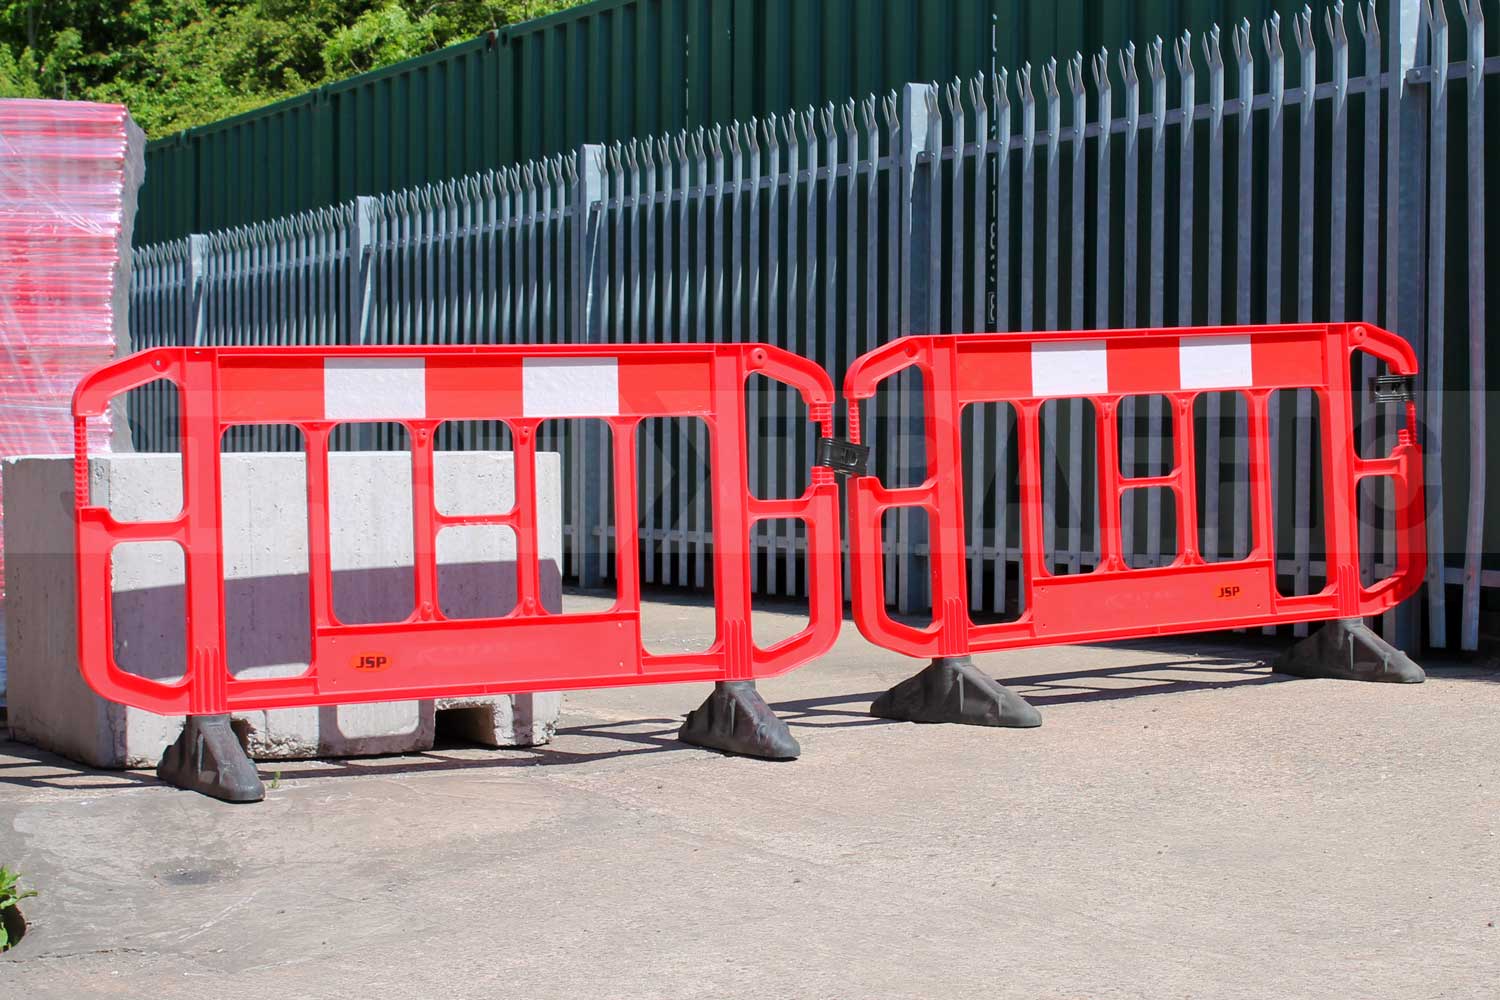  Titan Barrier blocking access